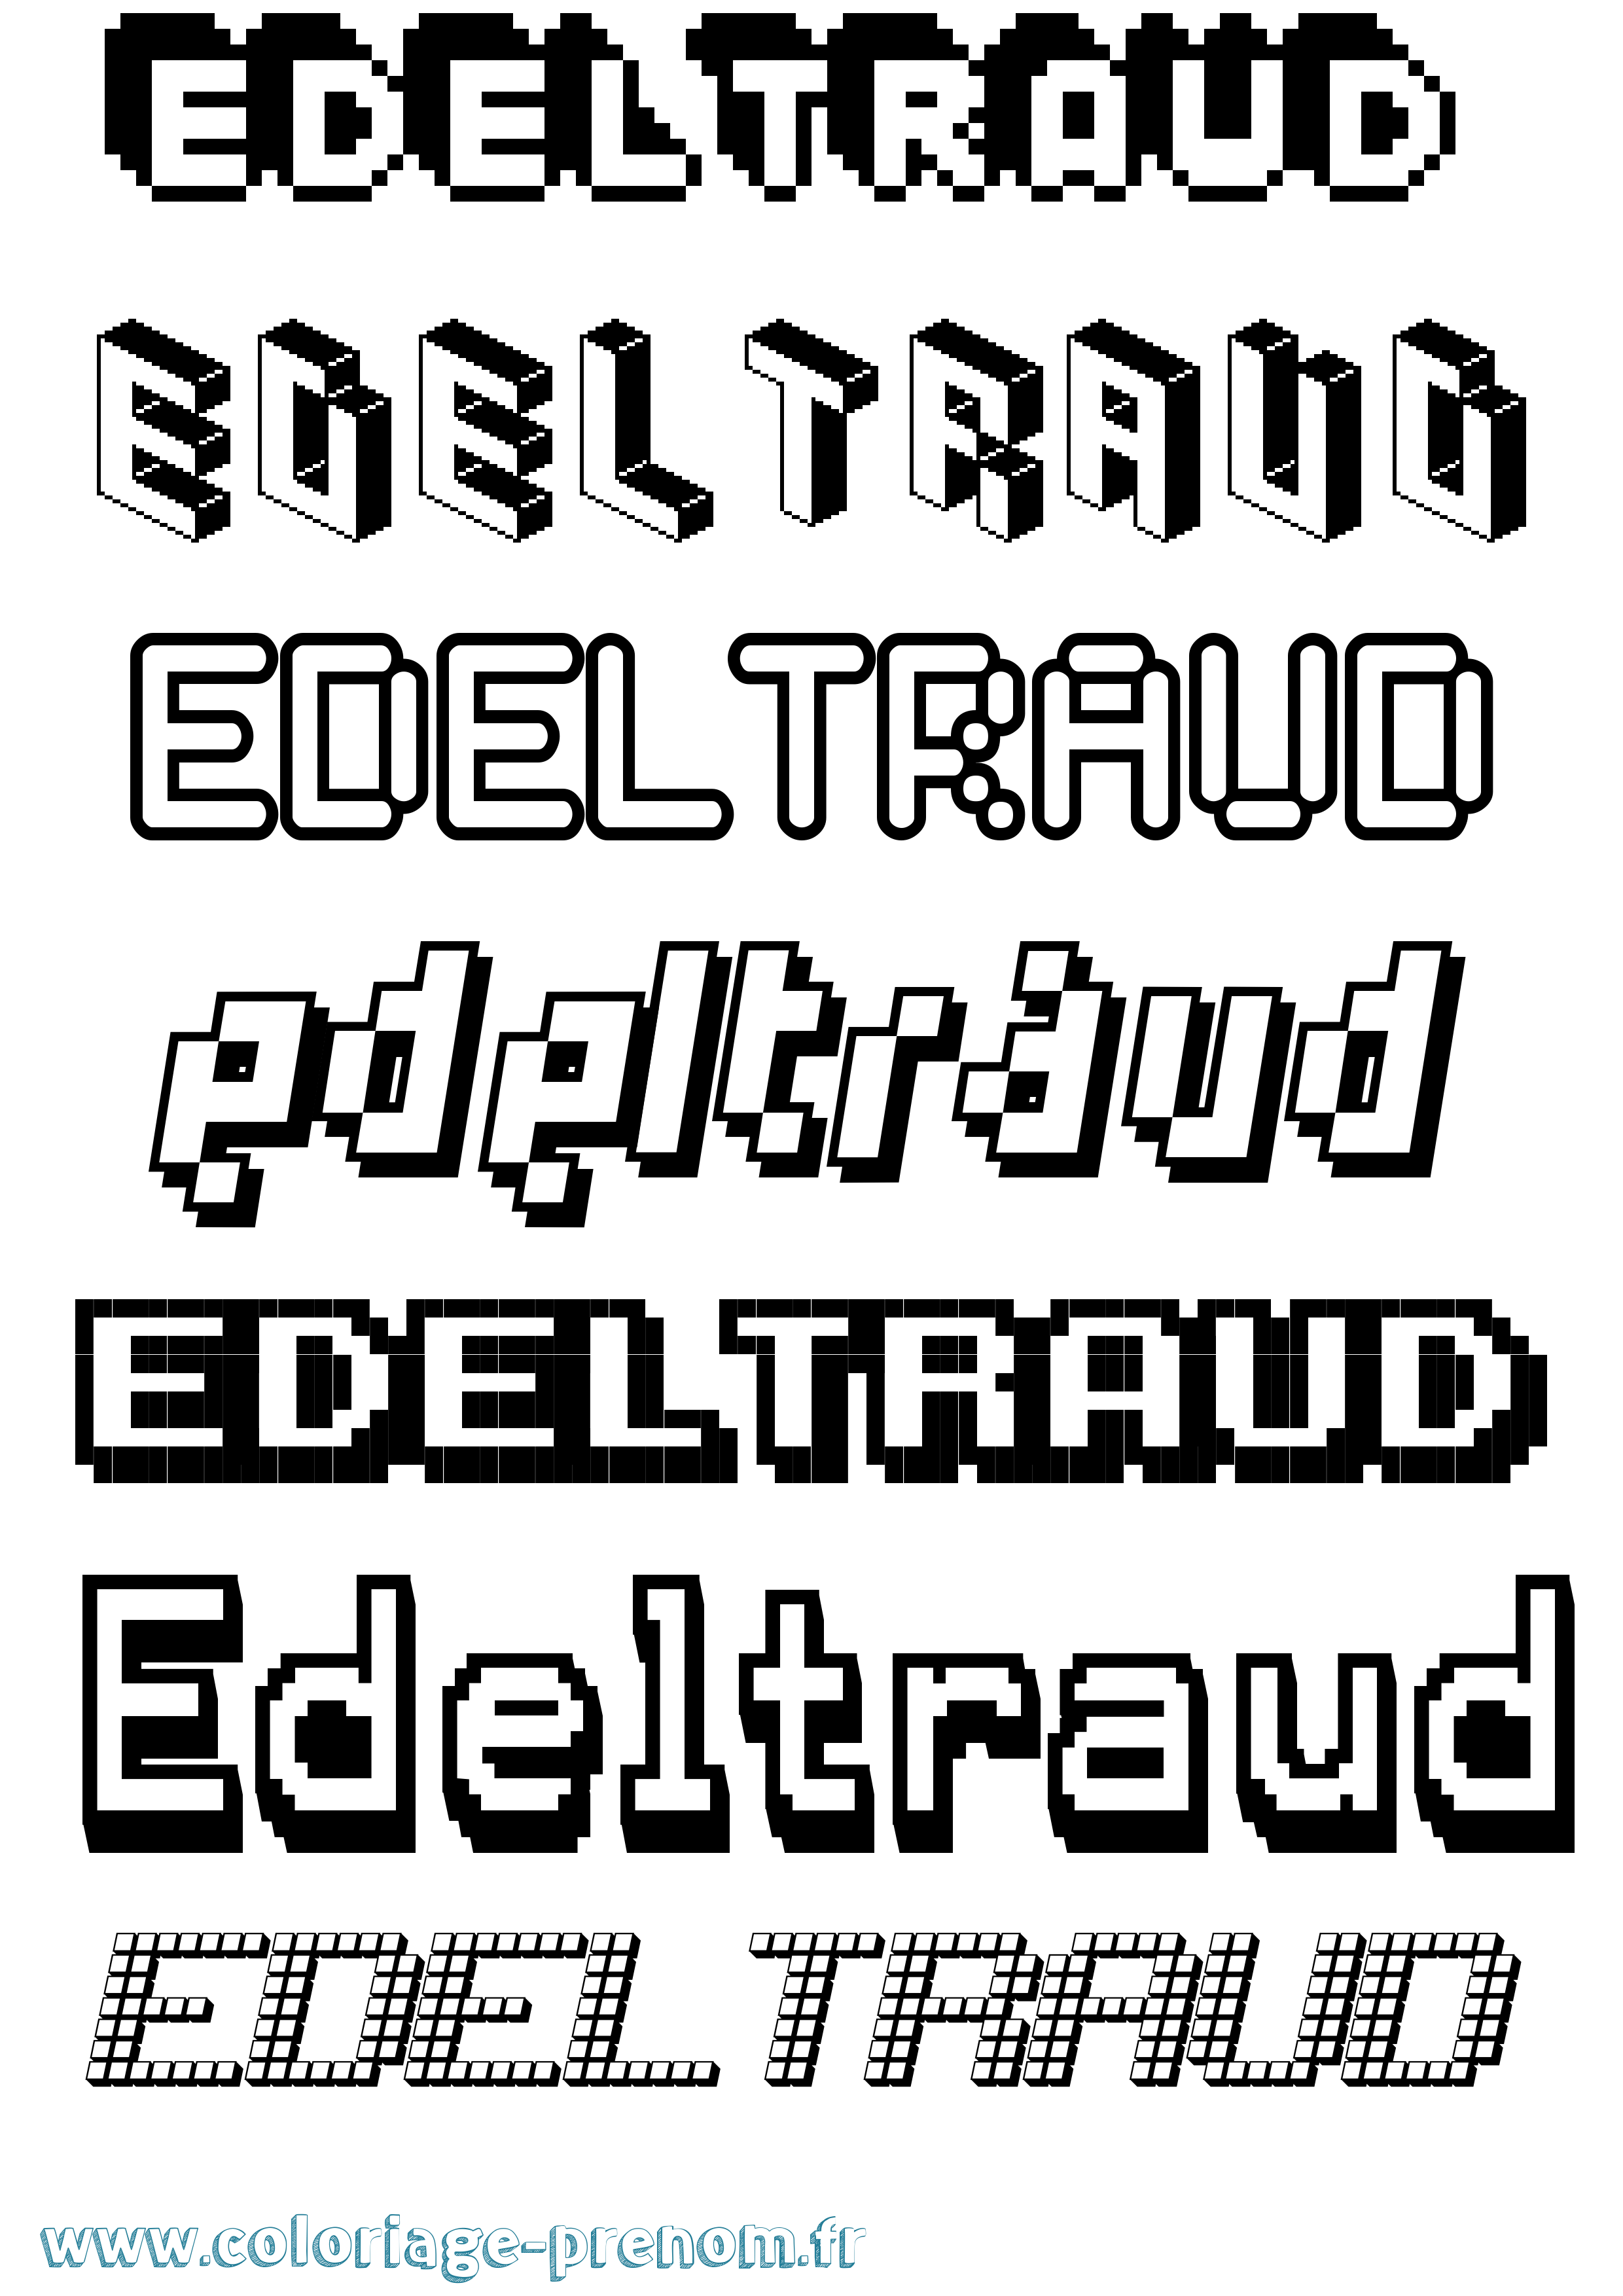 Coloriage prénom Edeltraud Pixel